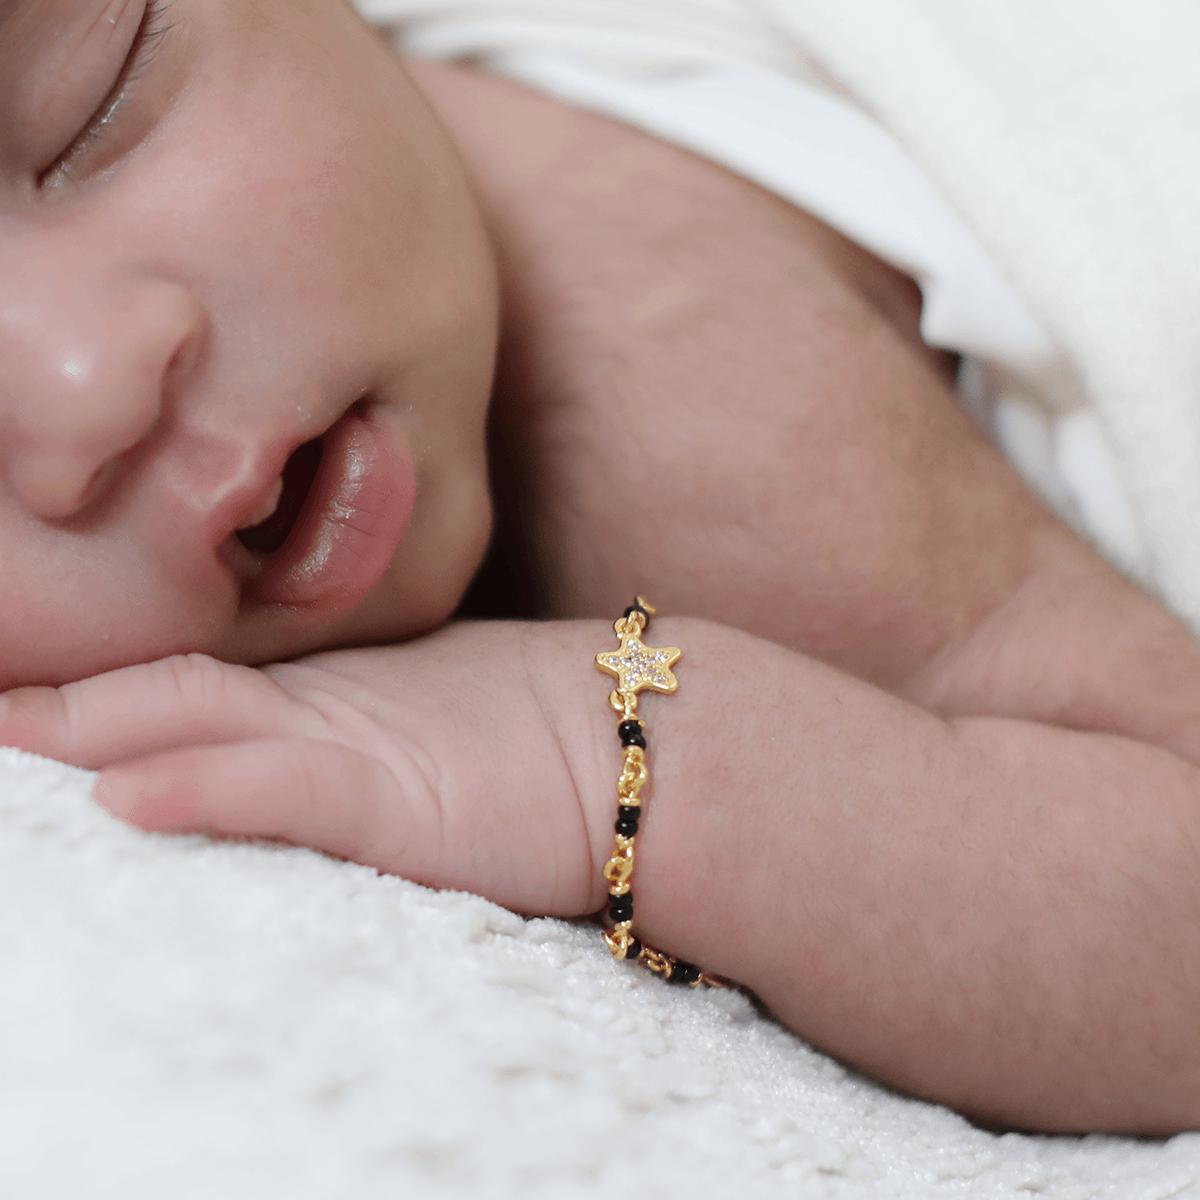 traditional design 18kt gold earrings hoop upper ear earrings infant  earrings | eBay